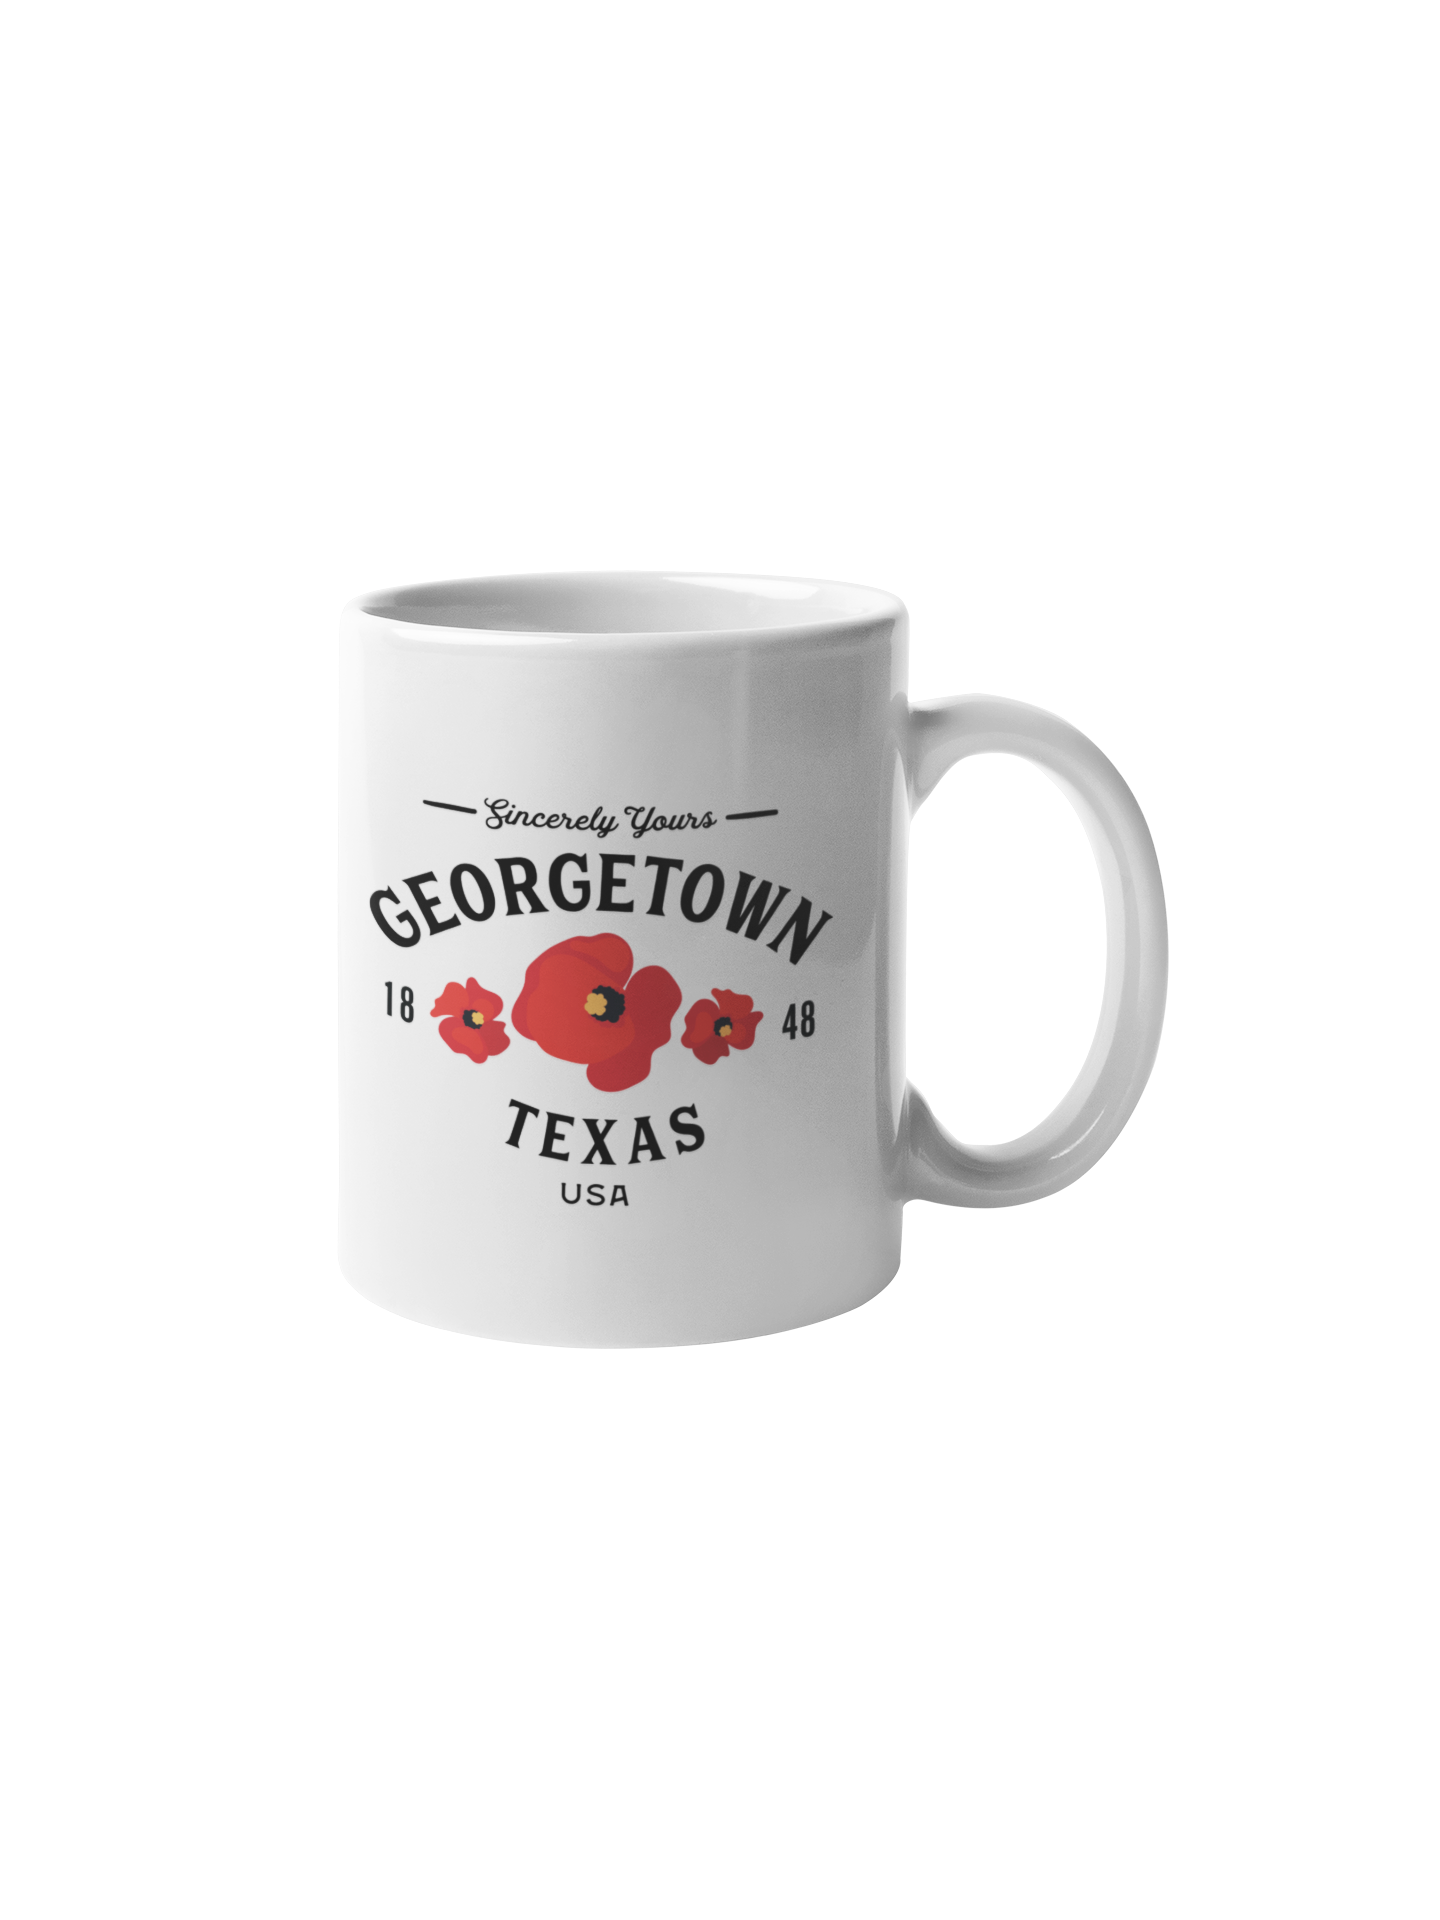 Georgetown Texas Mug - Poppies